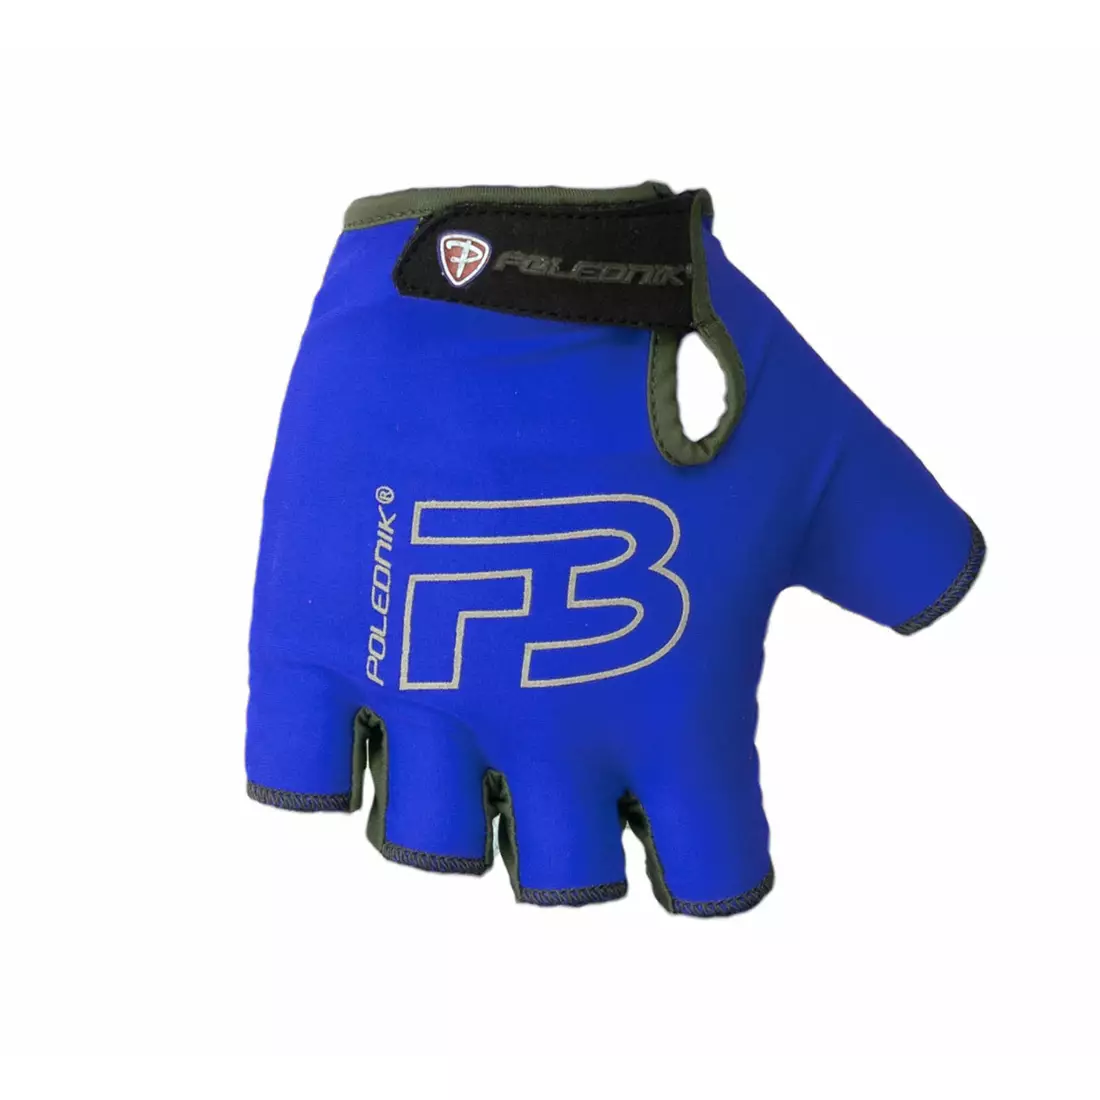 Mănuși POLEDNIK F3 NEW14 albastre